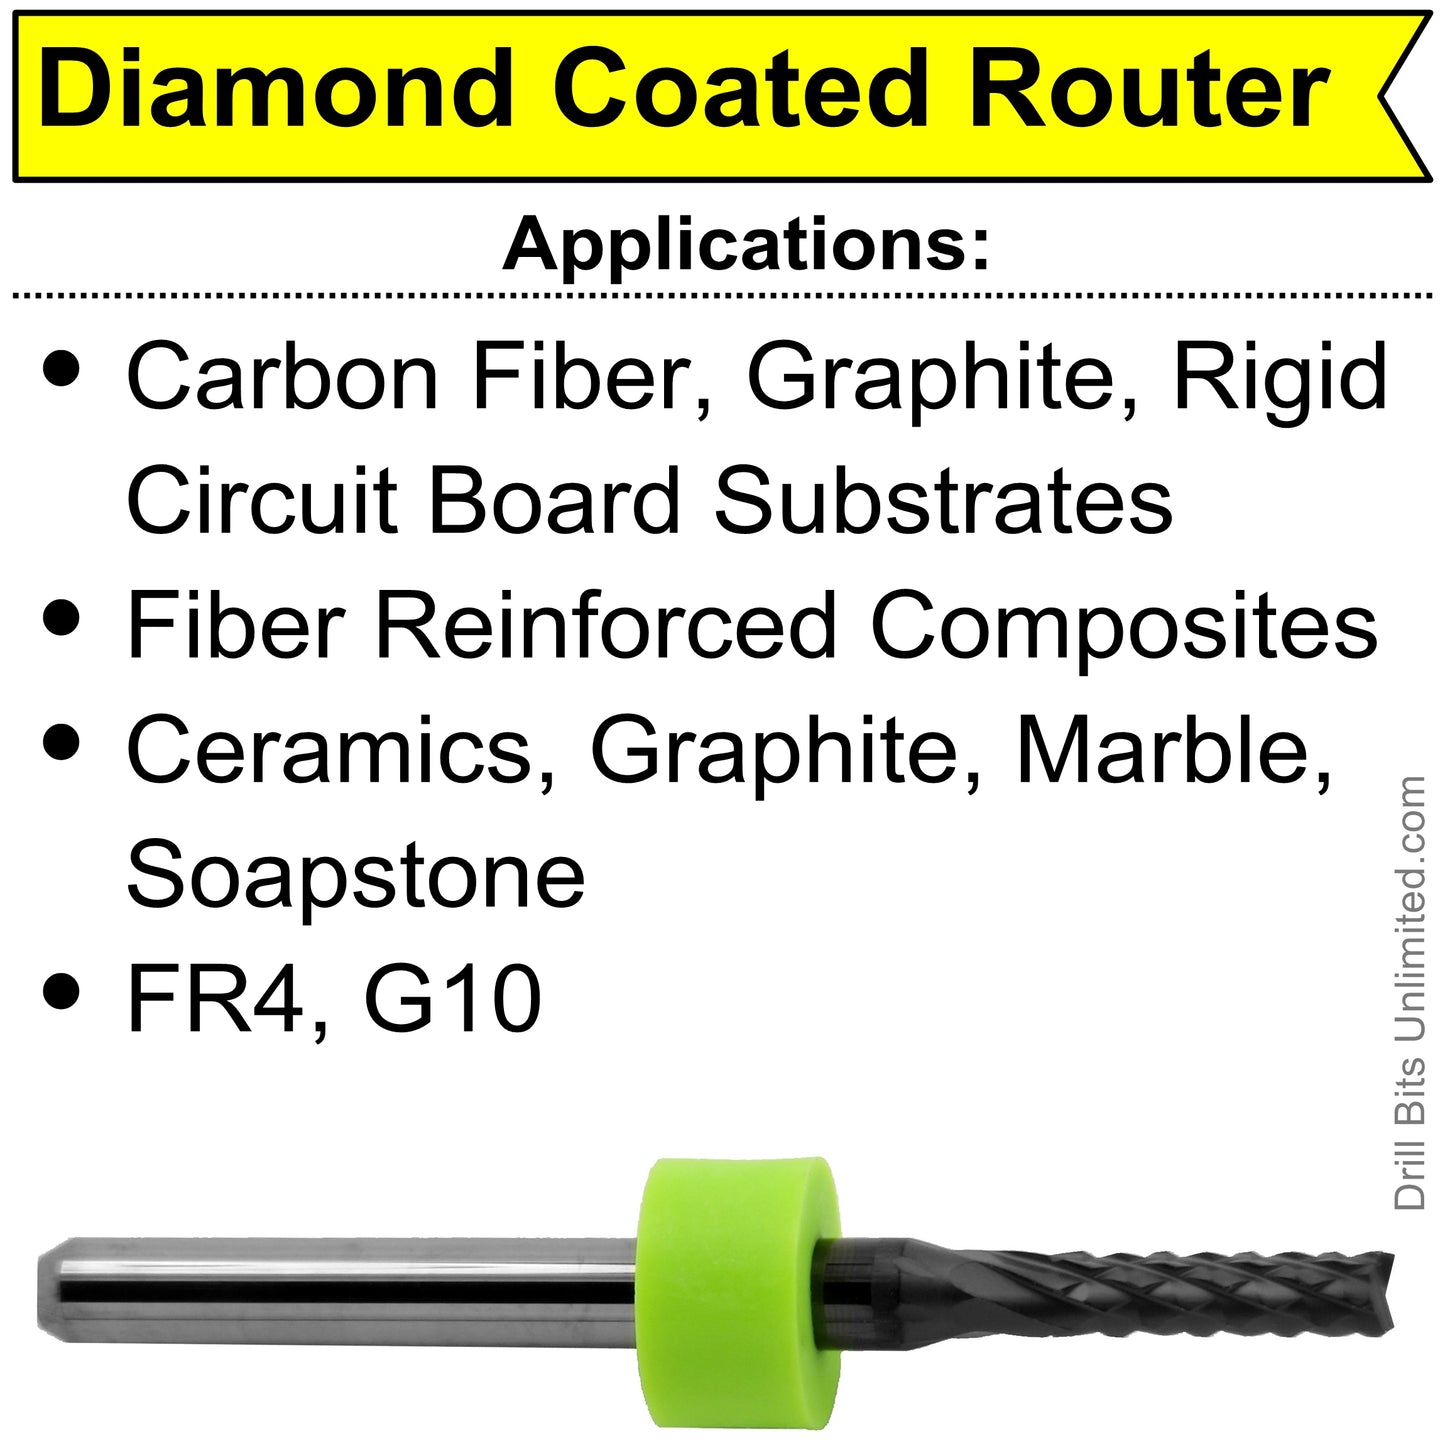 1/16" .0625" PCD Diamond Coated Router Bit Fishtail Tip -  Carbon Fiber,  Graphite, Ceramic Hard and Abrasive Materials PCD 116